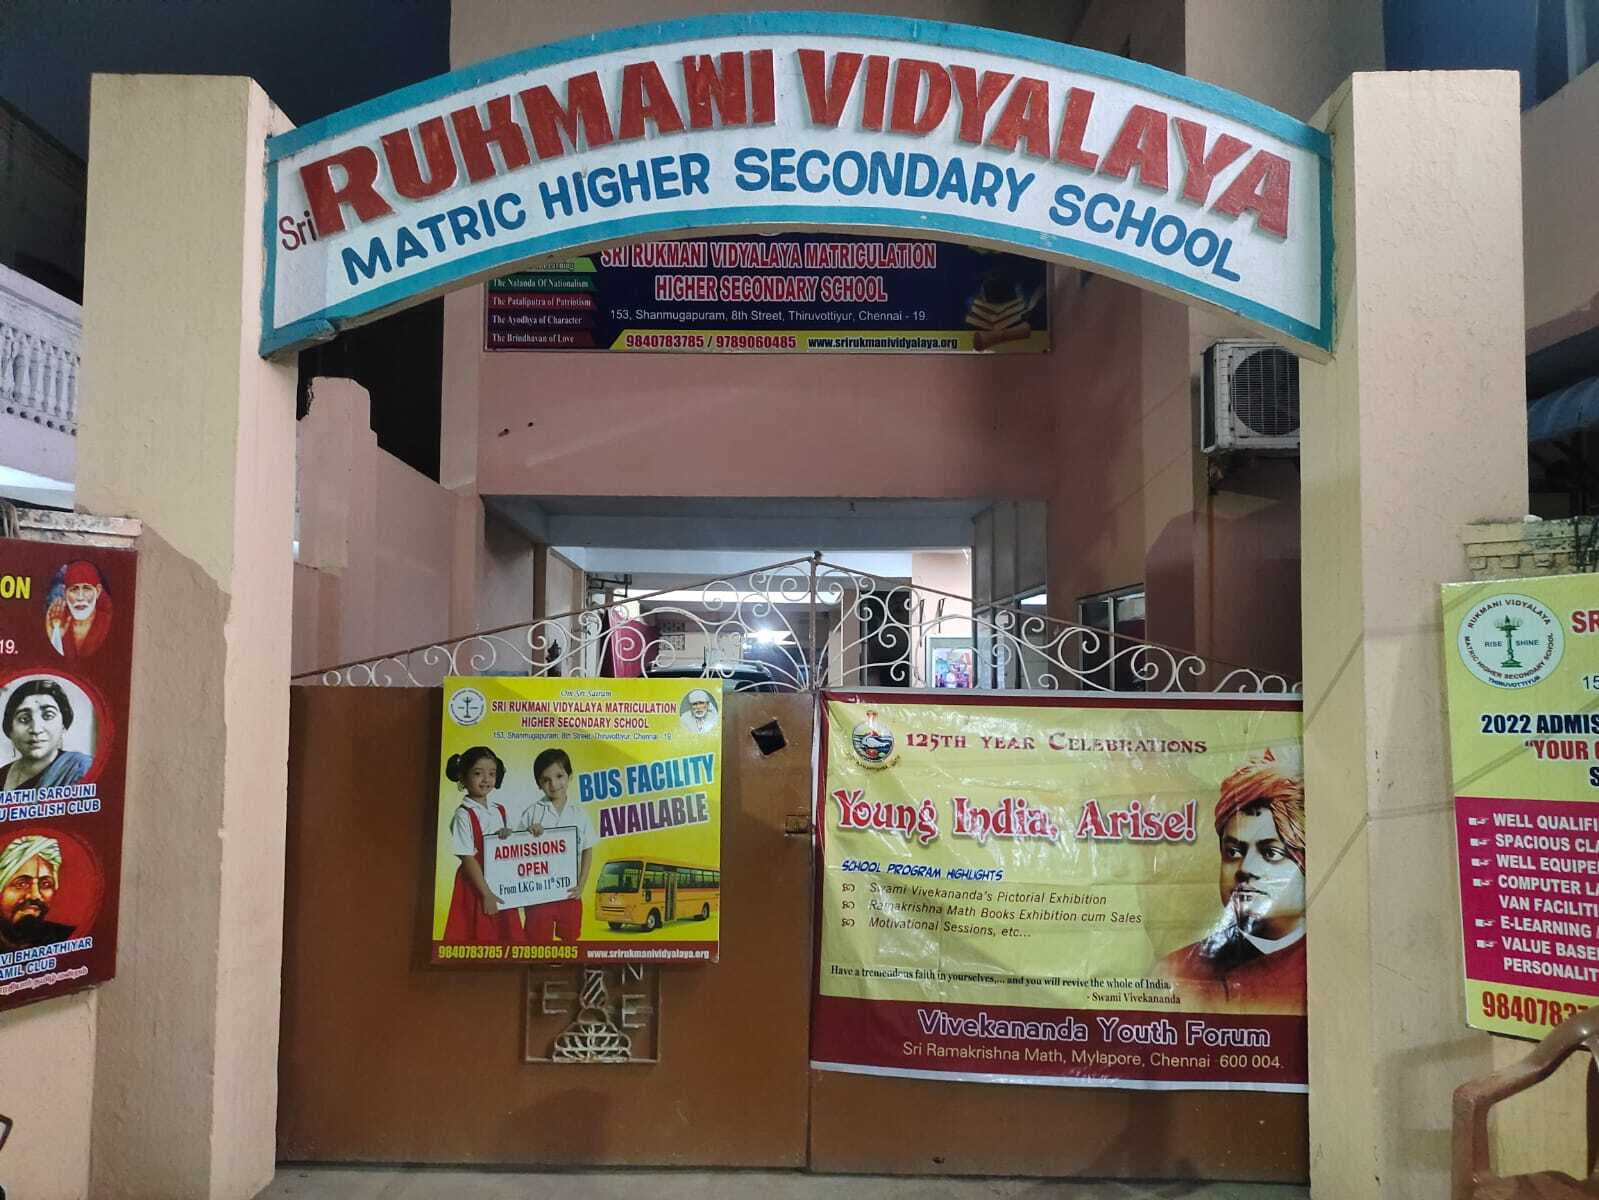 Young India, Arise! - Sri Rukmani Vidyalaya Matriculation Higher Secondary School